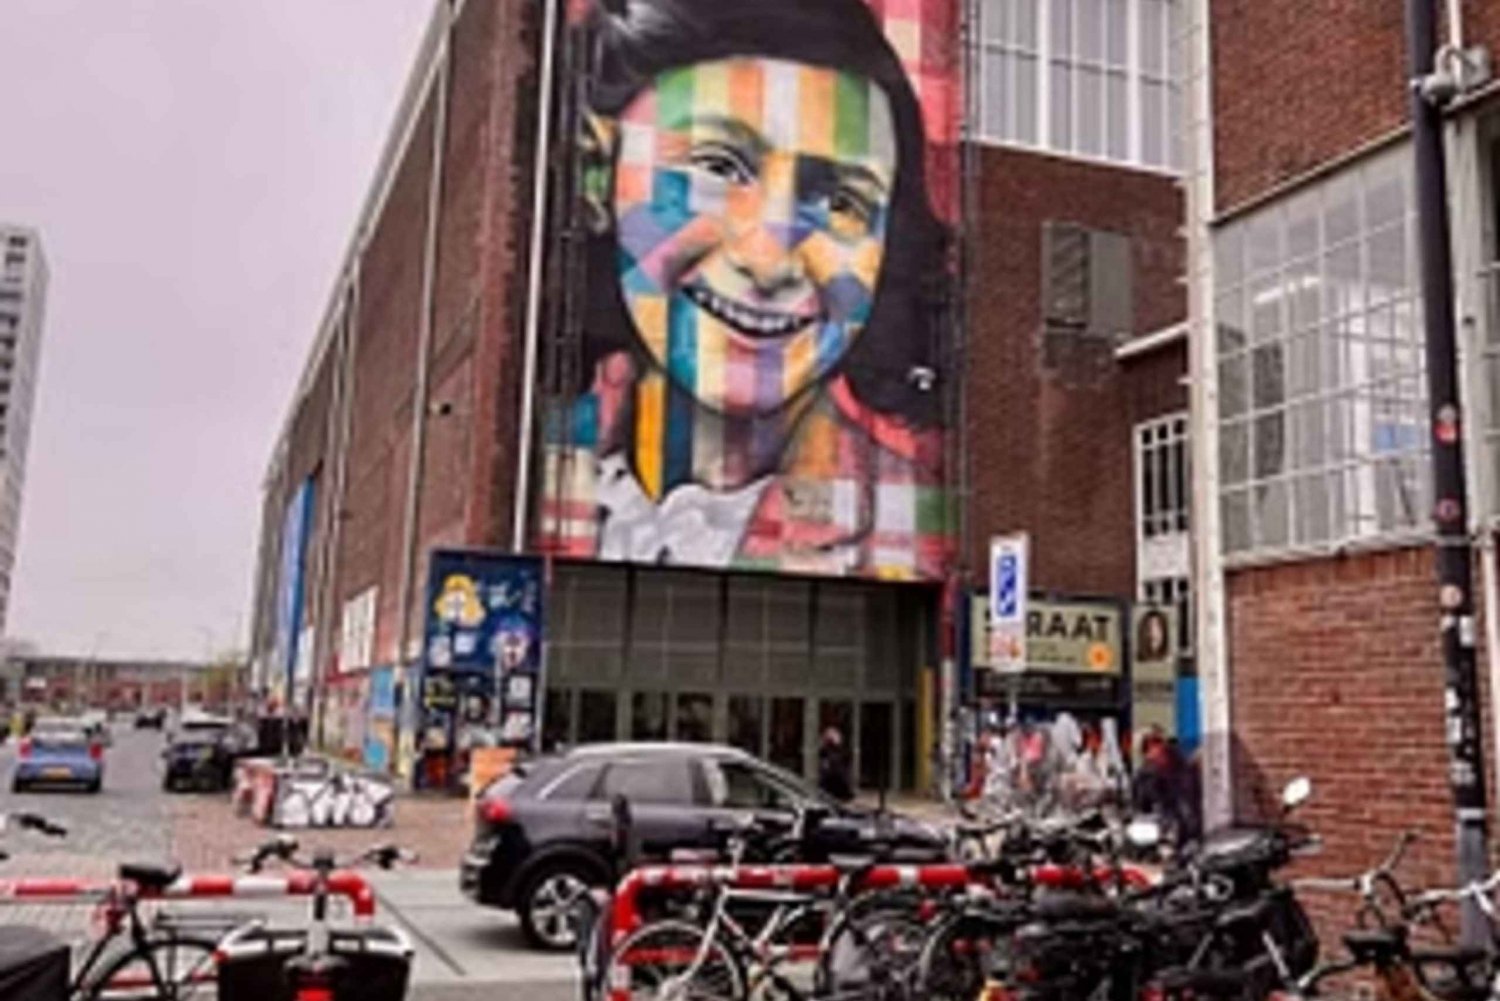 Amsterdam Street Art and NDSM tour